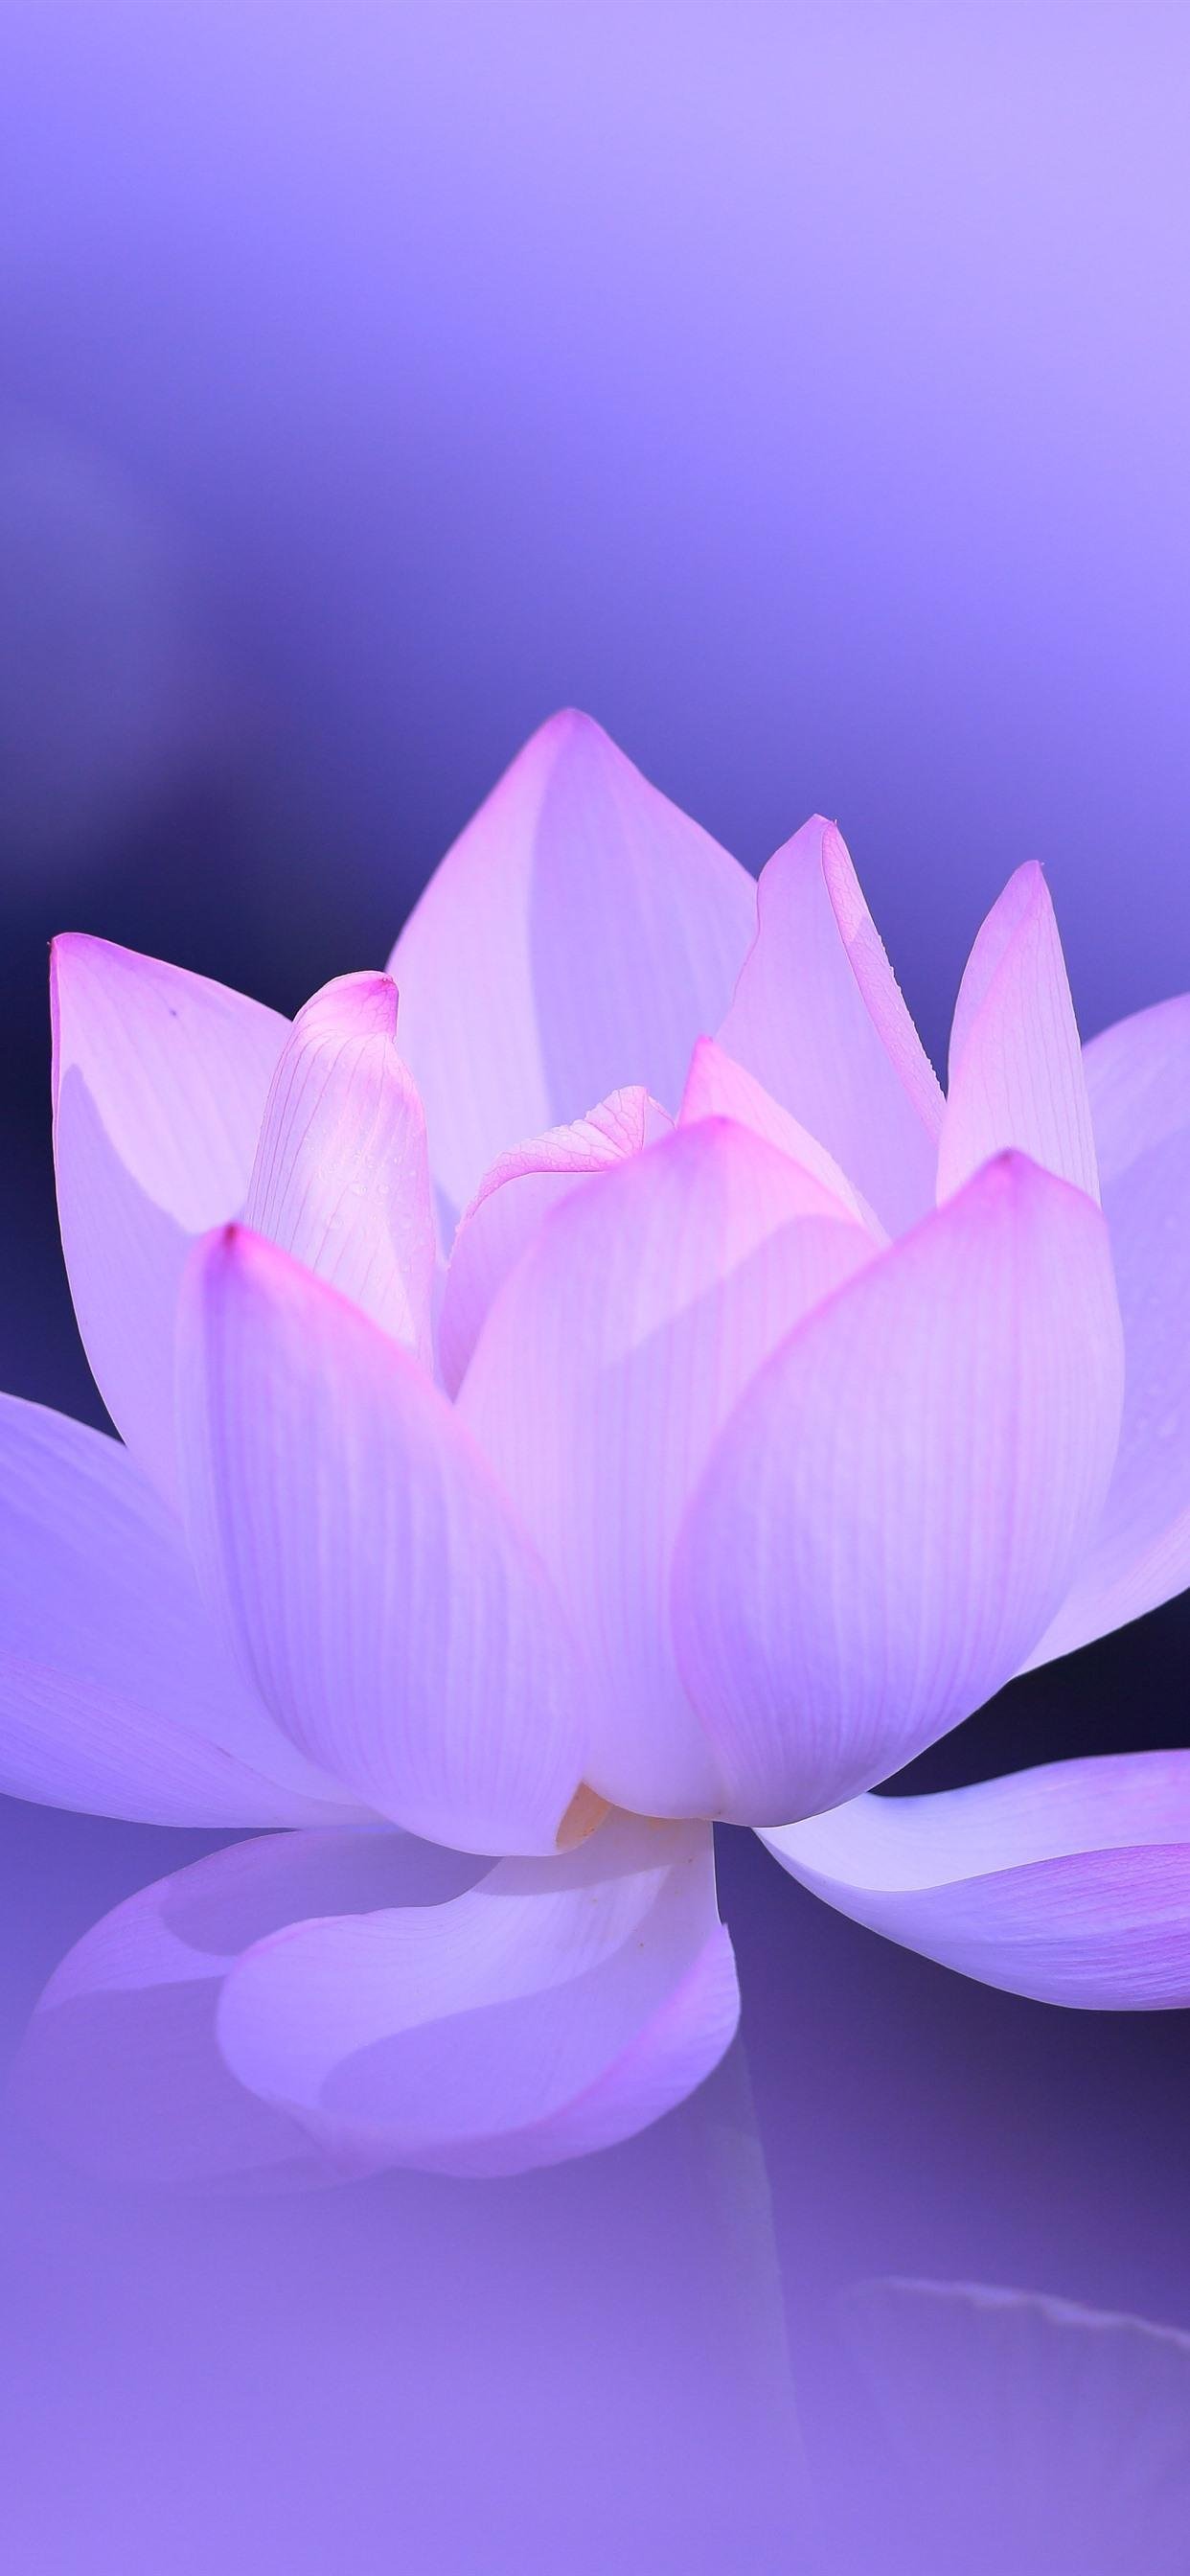 Download Budding Lotus Flower Wallpaper | Wallpapers.com